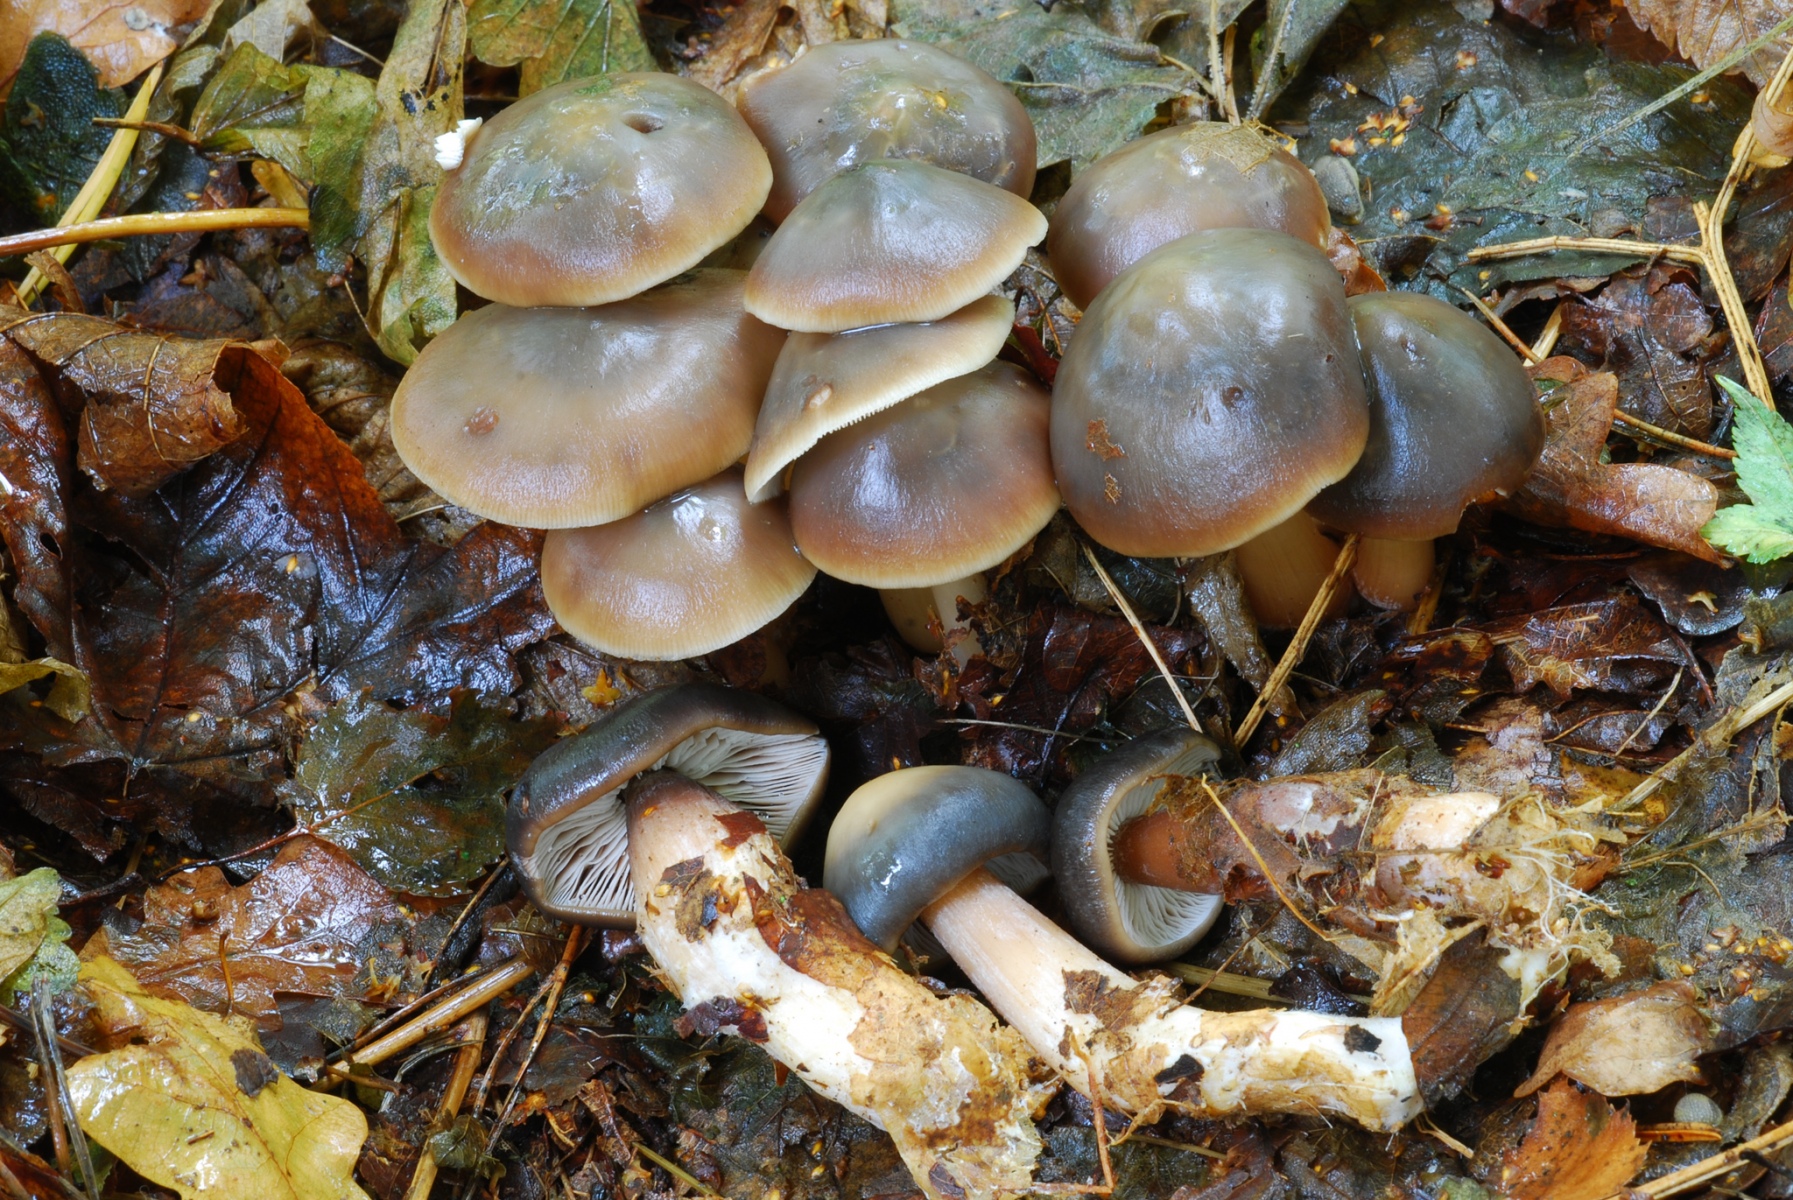 Rhodocollybia butyracea - Butter Cap, Clumber Park NT, Notts.